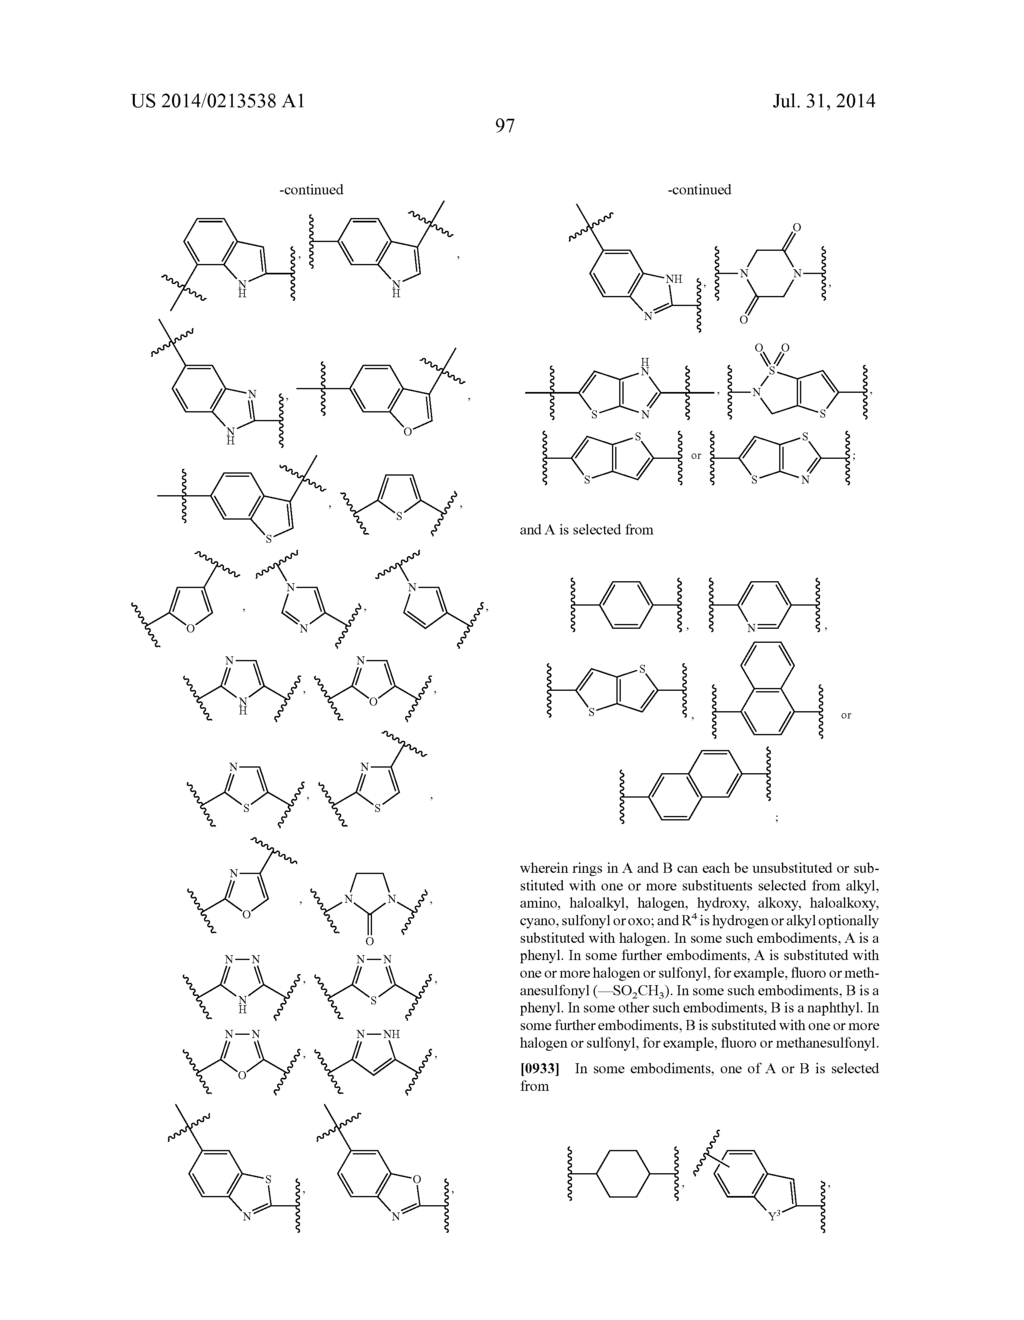 LYSOPHOSPHATIDIC ACID RECEPTOR ANTAGONISTS - diagram, schematic, and image 98